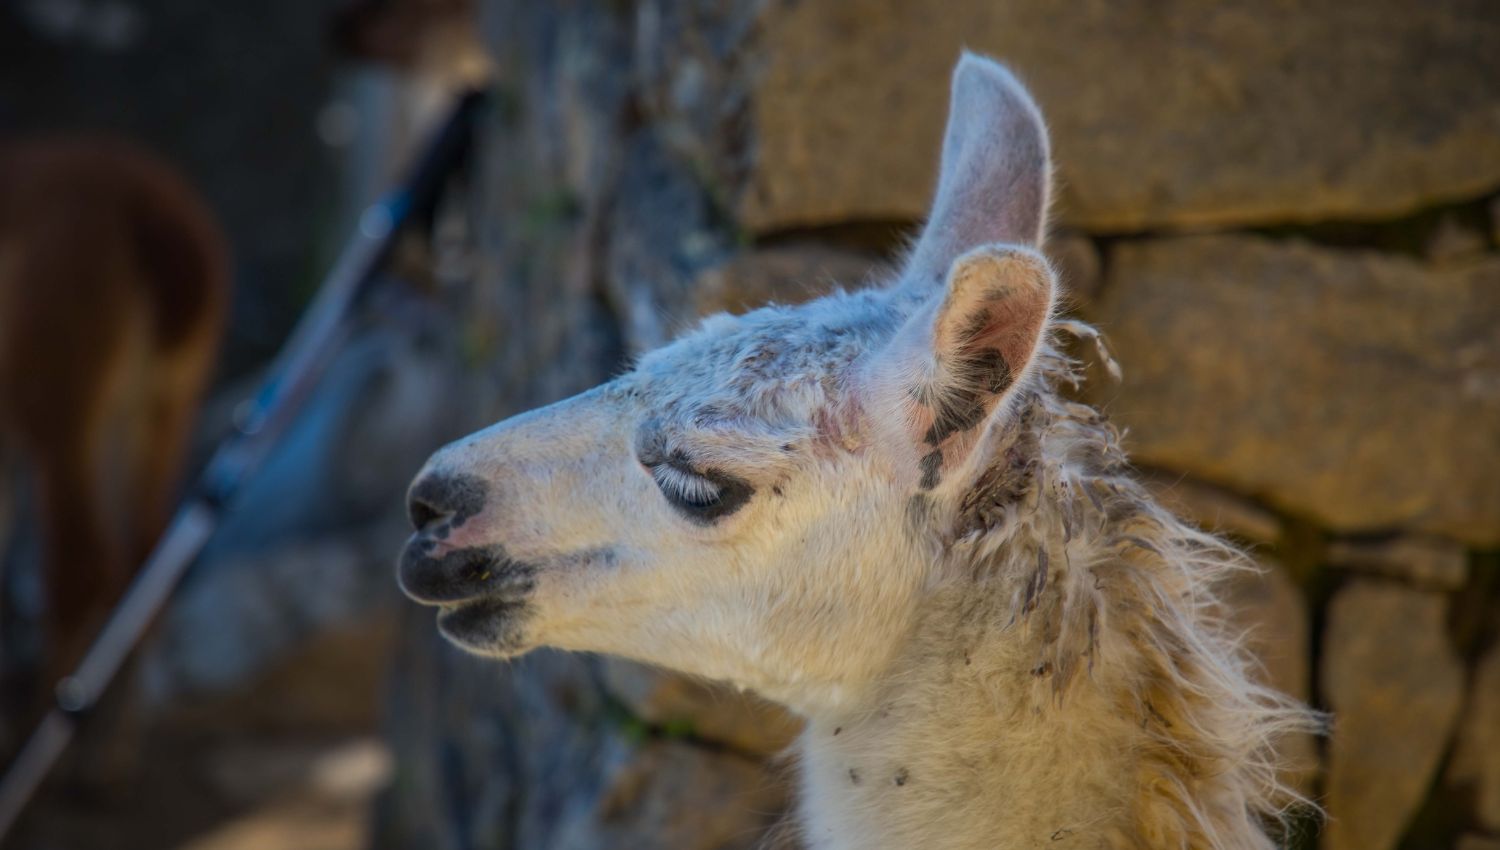 The head of a llama at the entrance of Machu Picchu